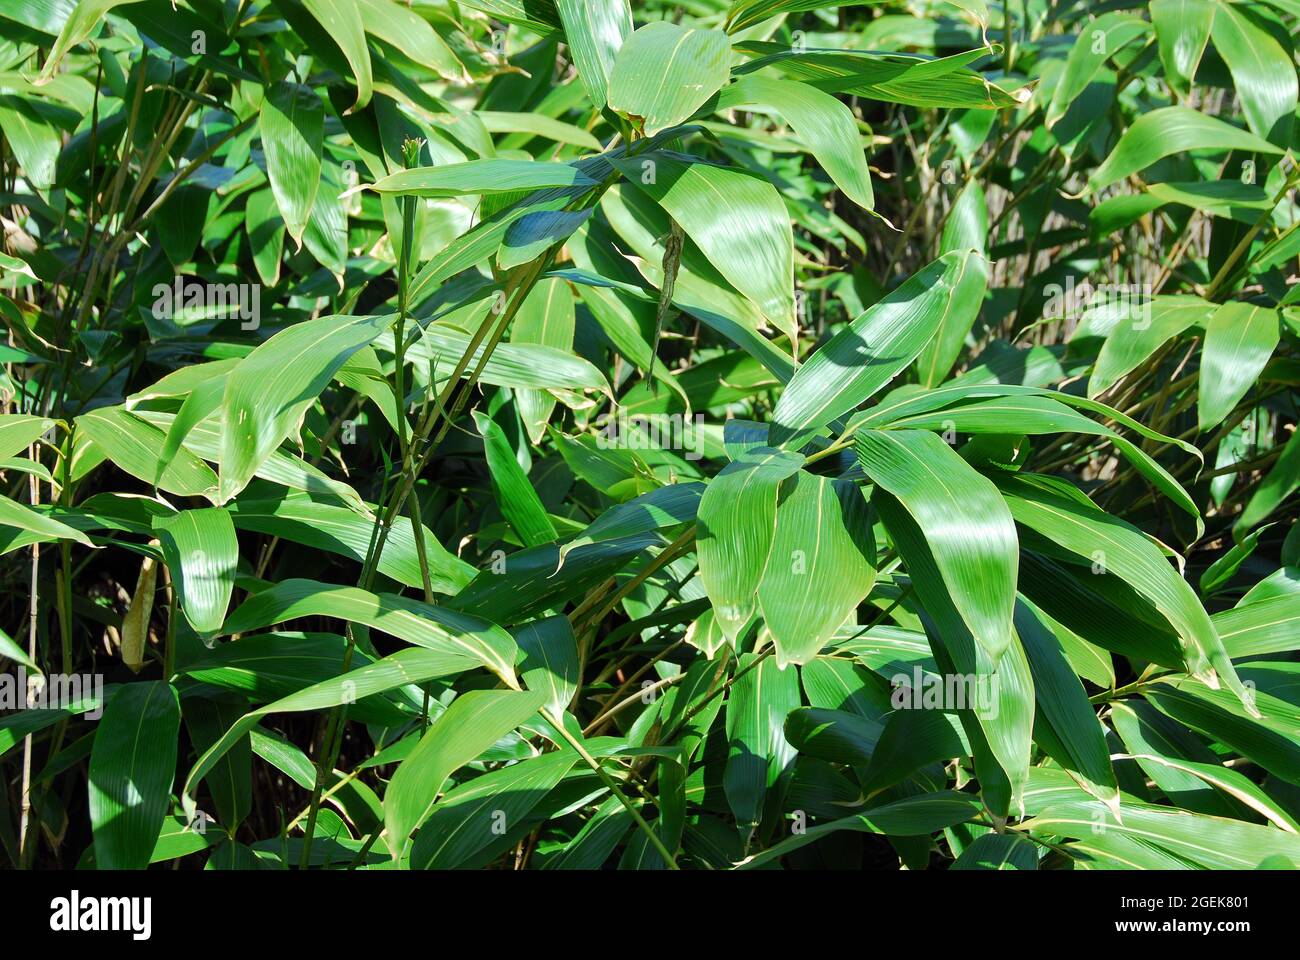 broadleaf bamboo or broad-leaved bamboo, Sasa palmata, legyező törpebambusz Stock Photo